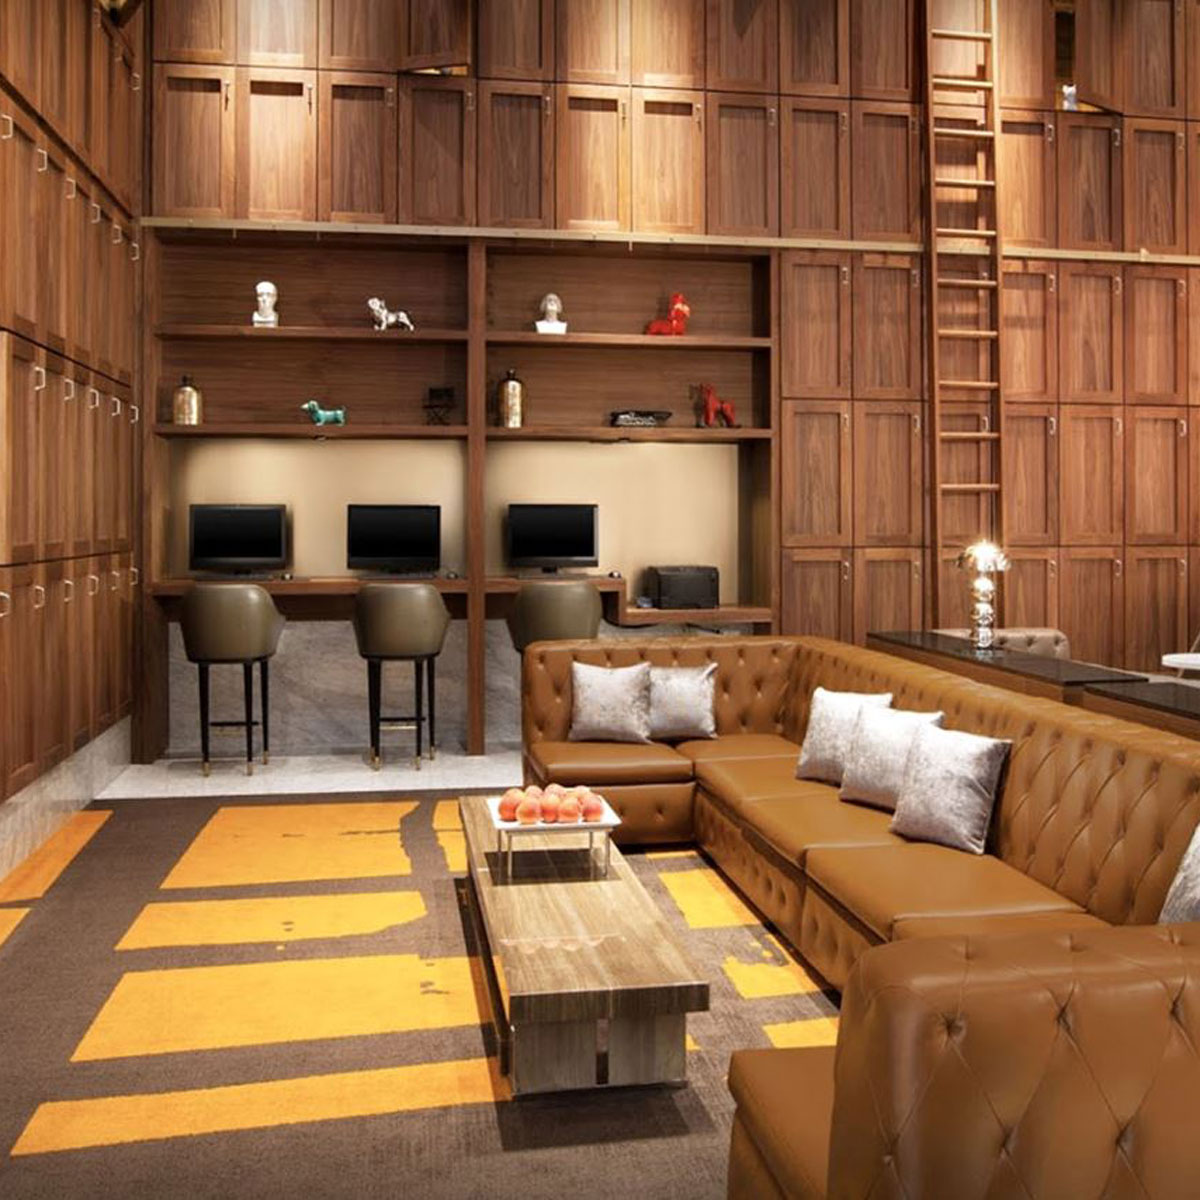 Custom furniture designs - Contraxx Customer Hospitality Furniture Designers Library